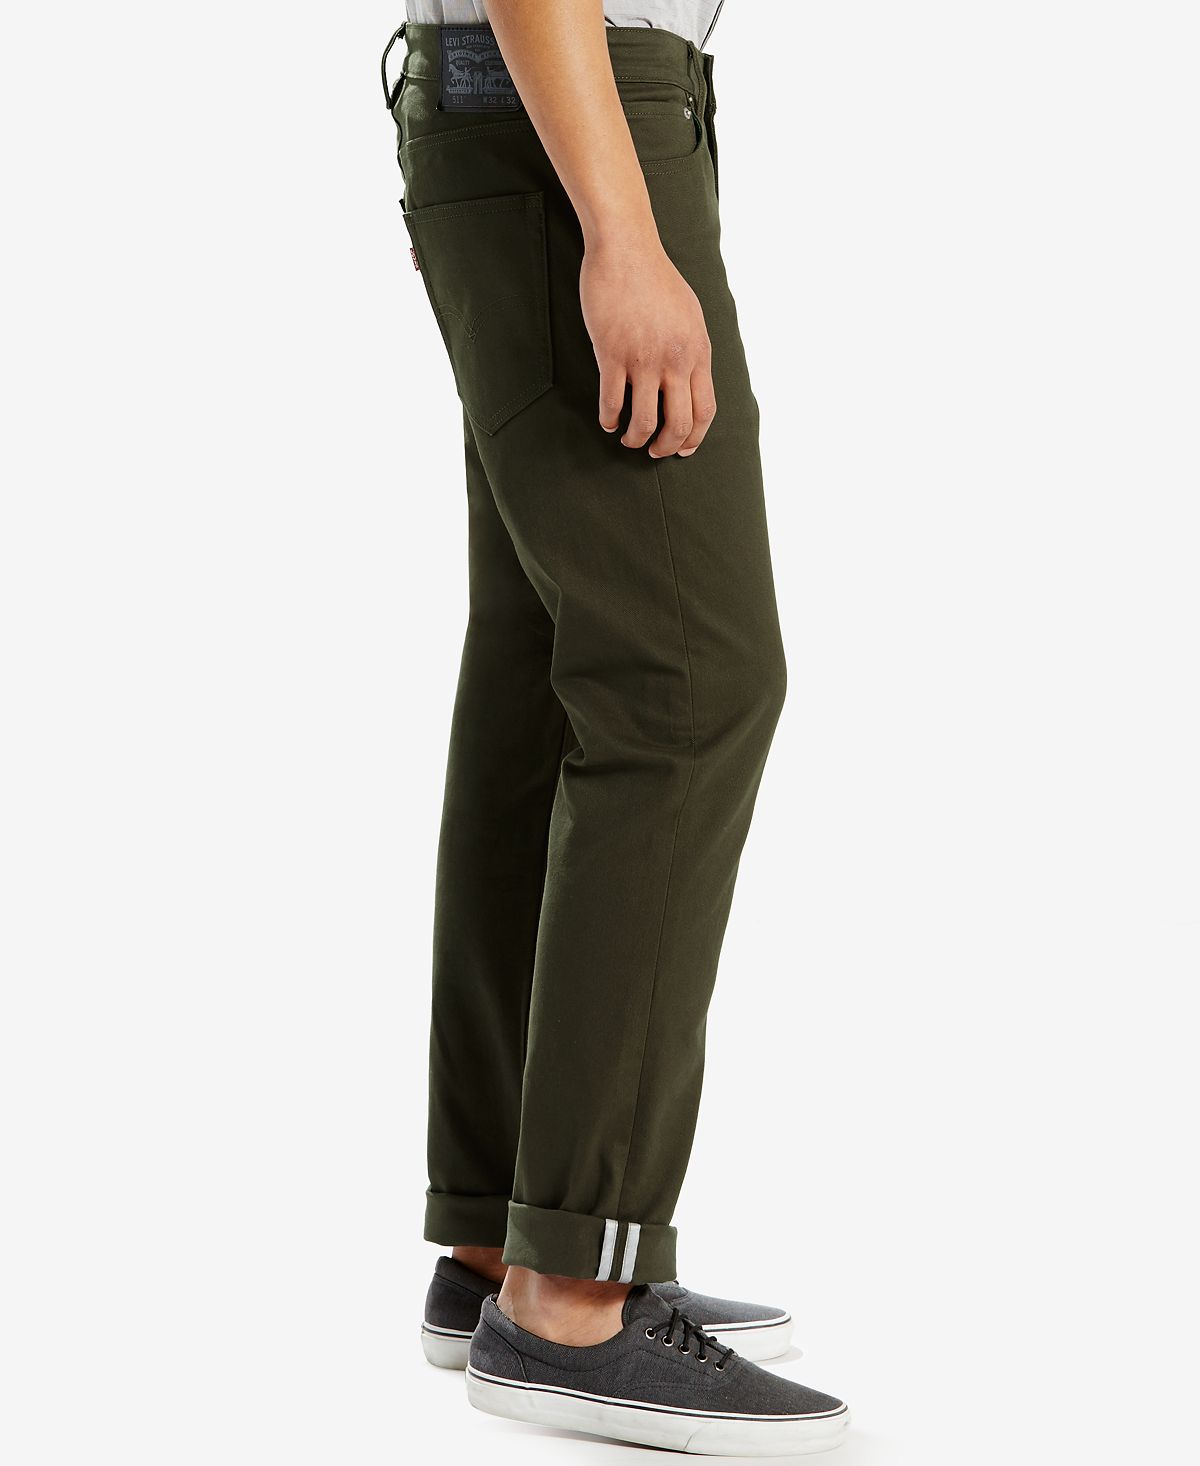 New men's Levi's 511 Slim Fit Stretch Commuter Jeans Pants 28 x 30 Burgundy  | eBay